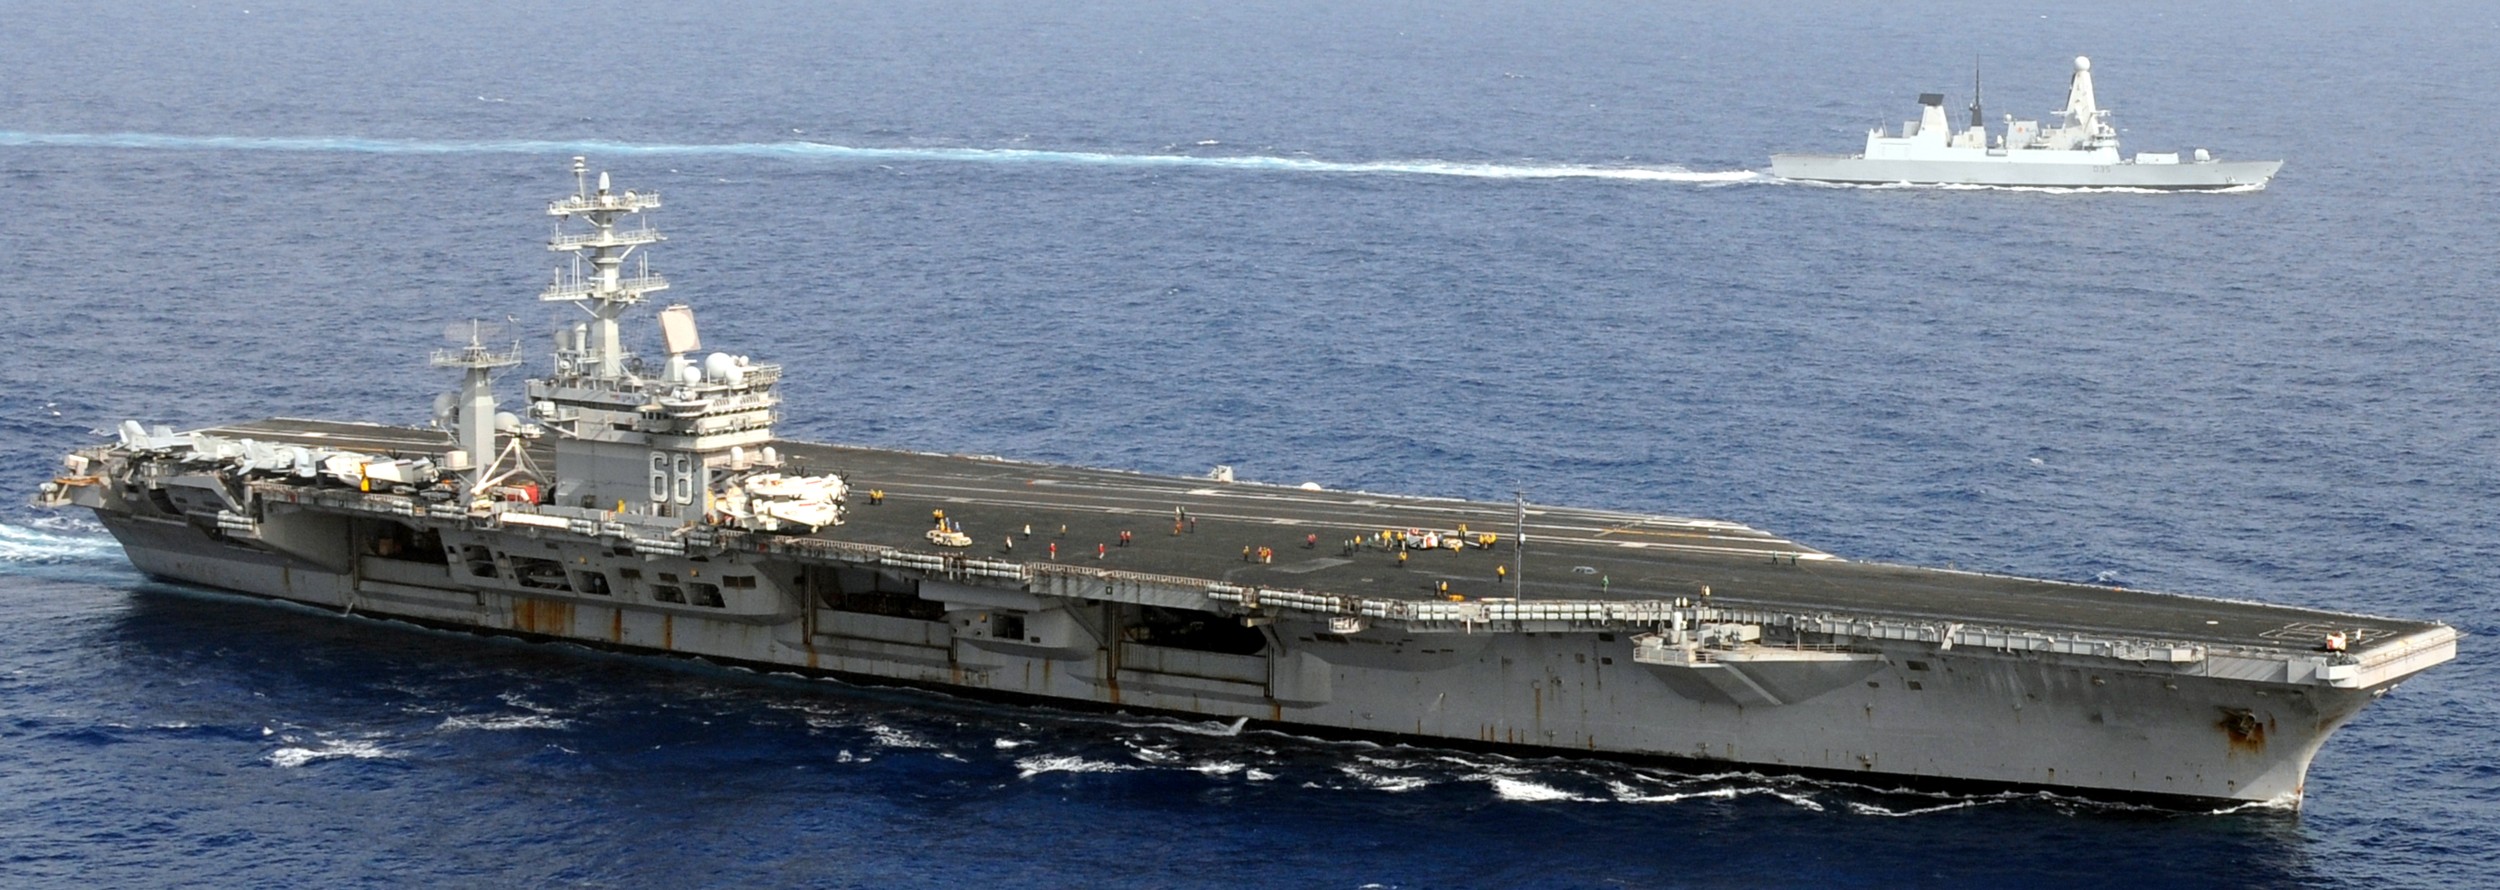 cvn-68 uss nimitz aircraft carrier air wing cvw-11 us navy mediterranean sea 90